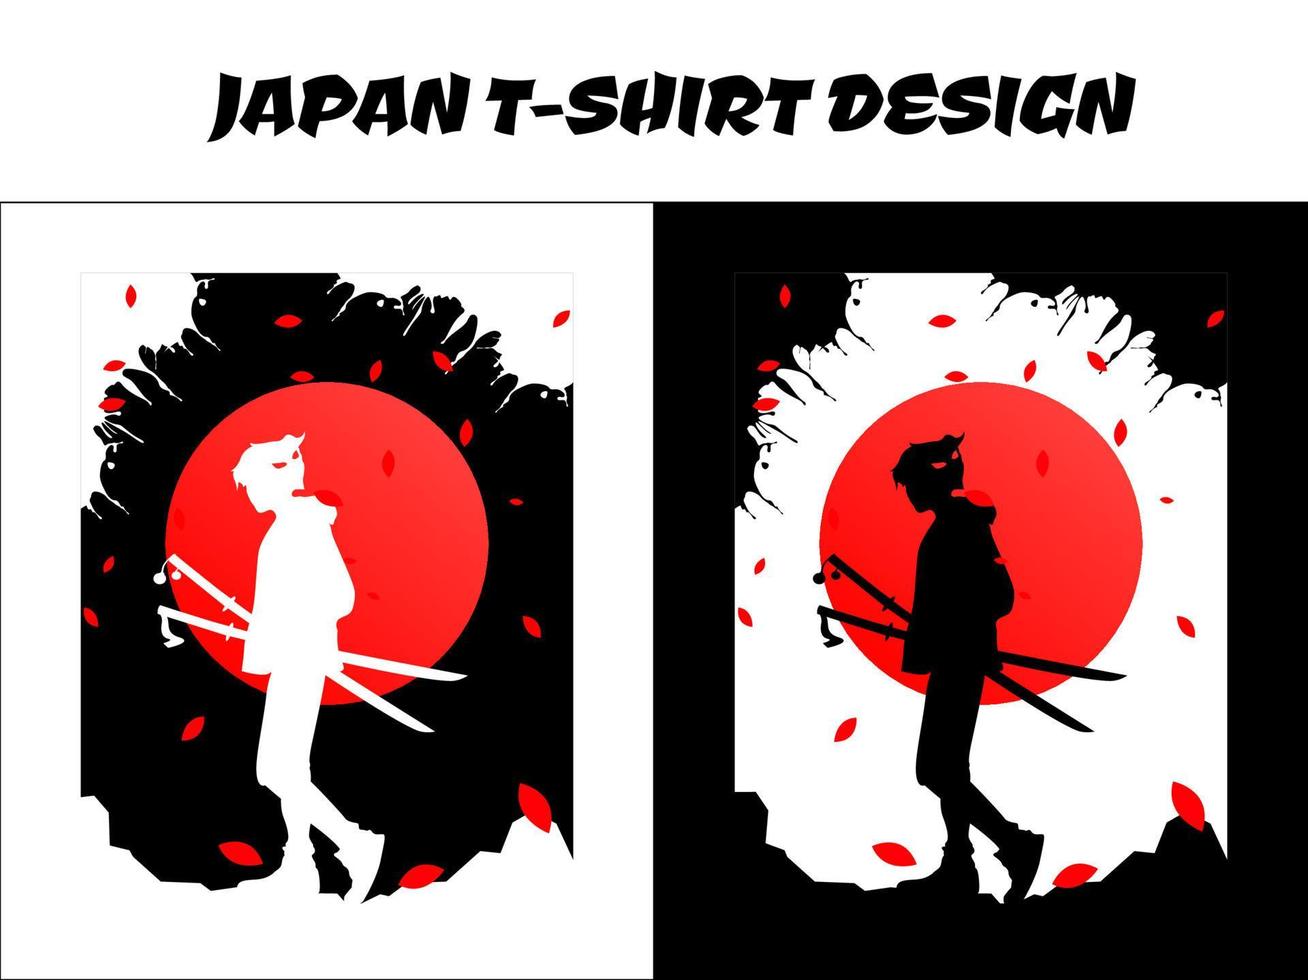 mannetje samurai vector illustratie, Japans t-shirt ontwerp, samurai jongen animatie, silhouet Japan samurai vector voor ontwerp t overhemd concept, silhouet samurai